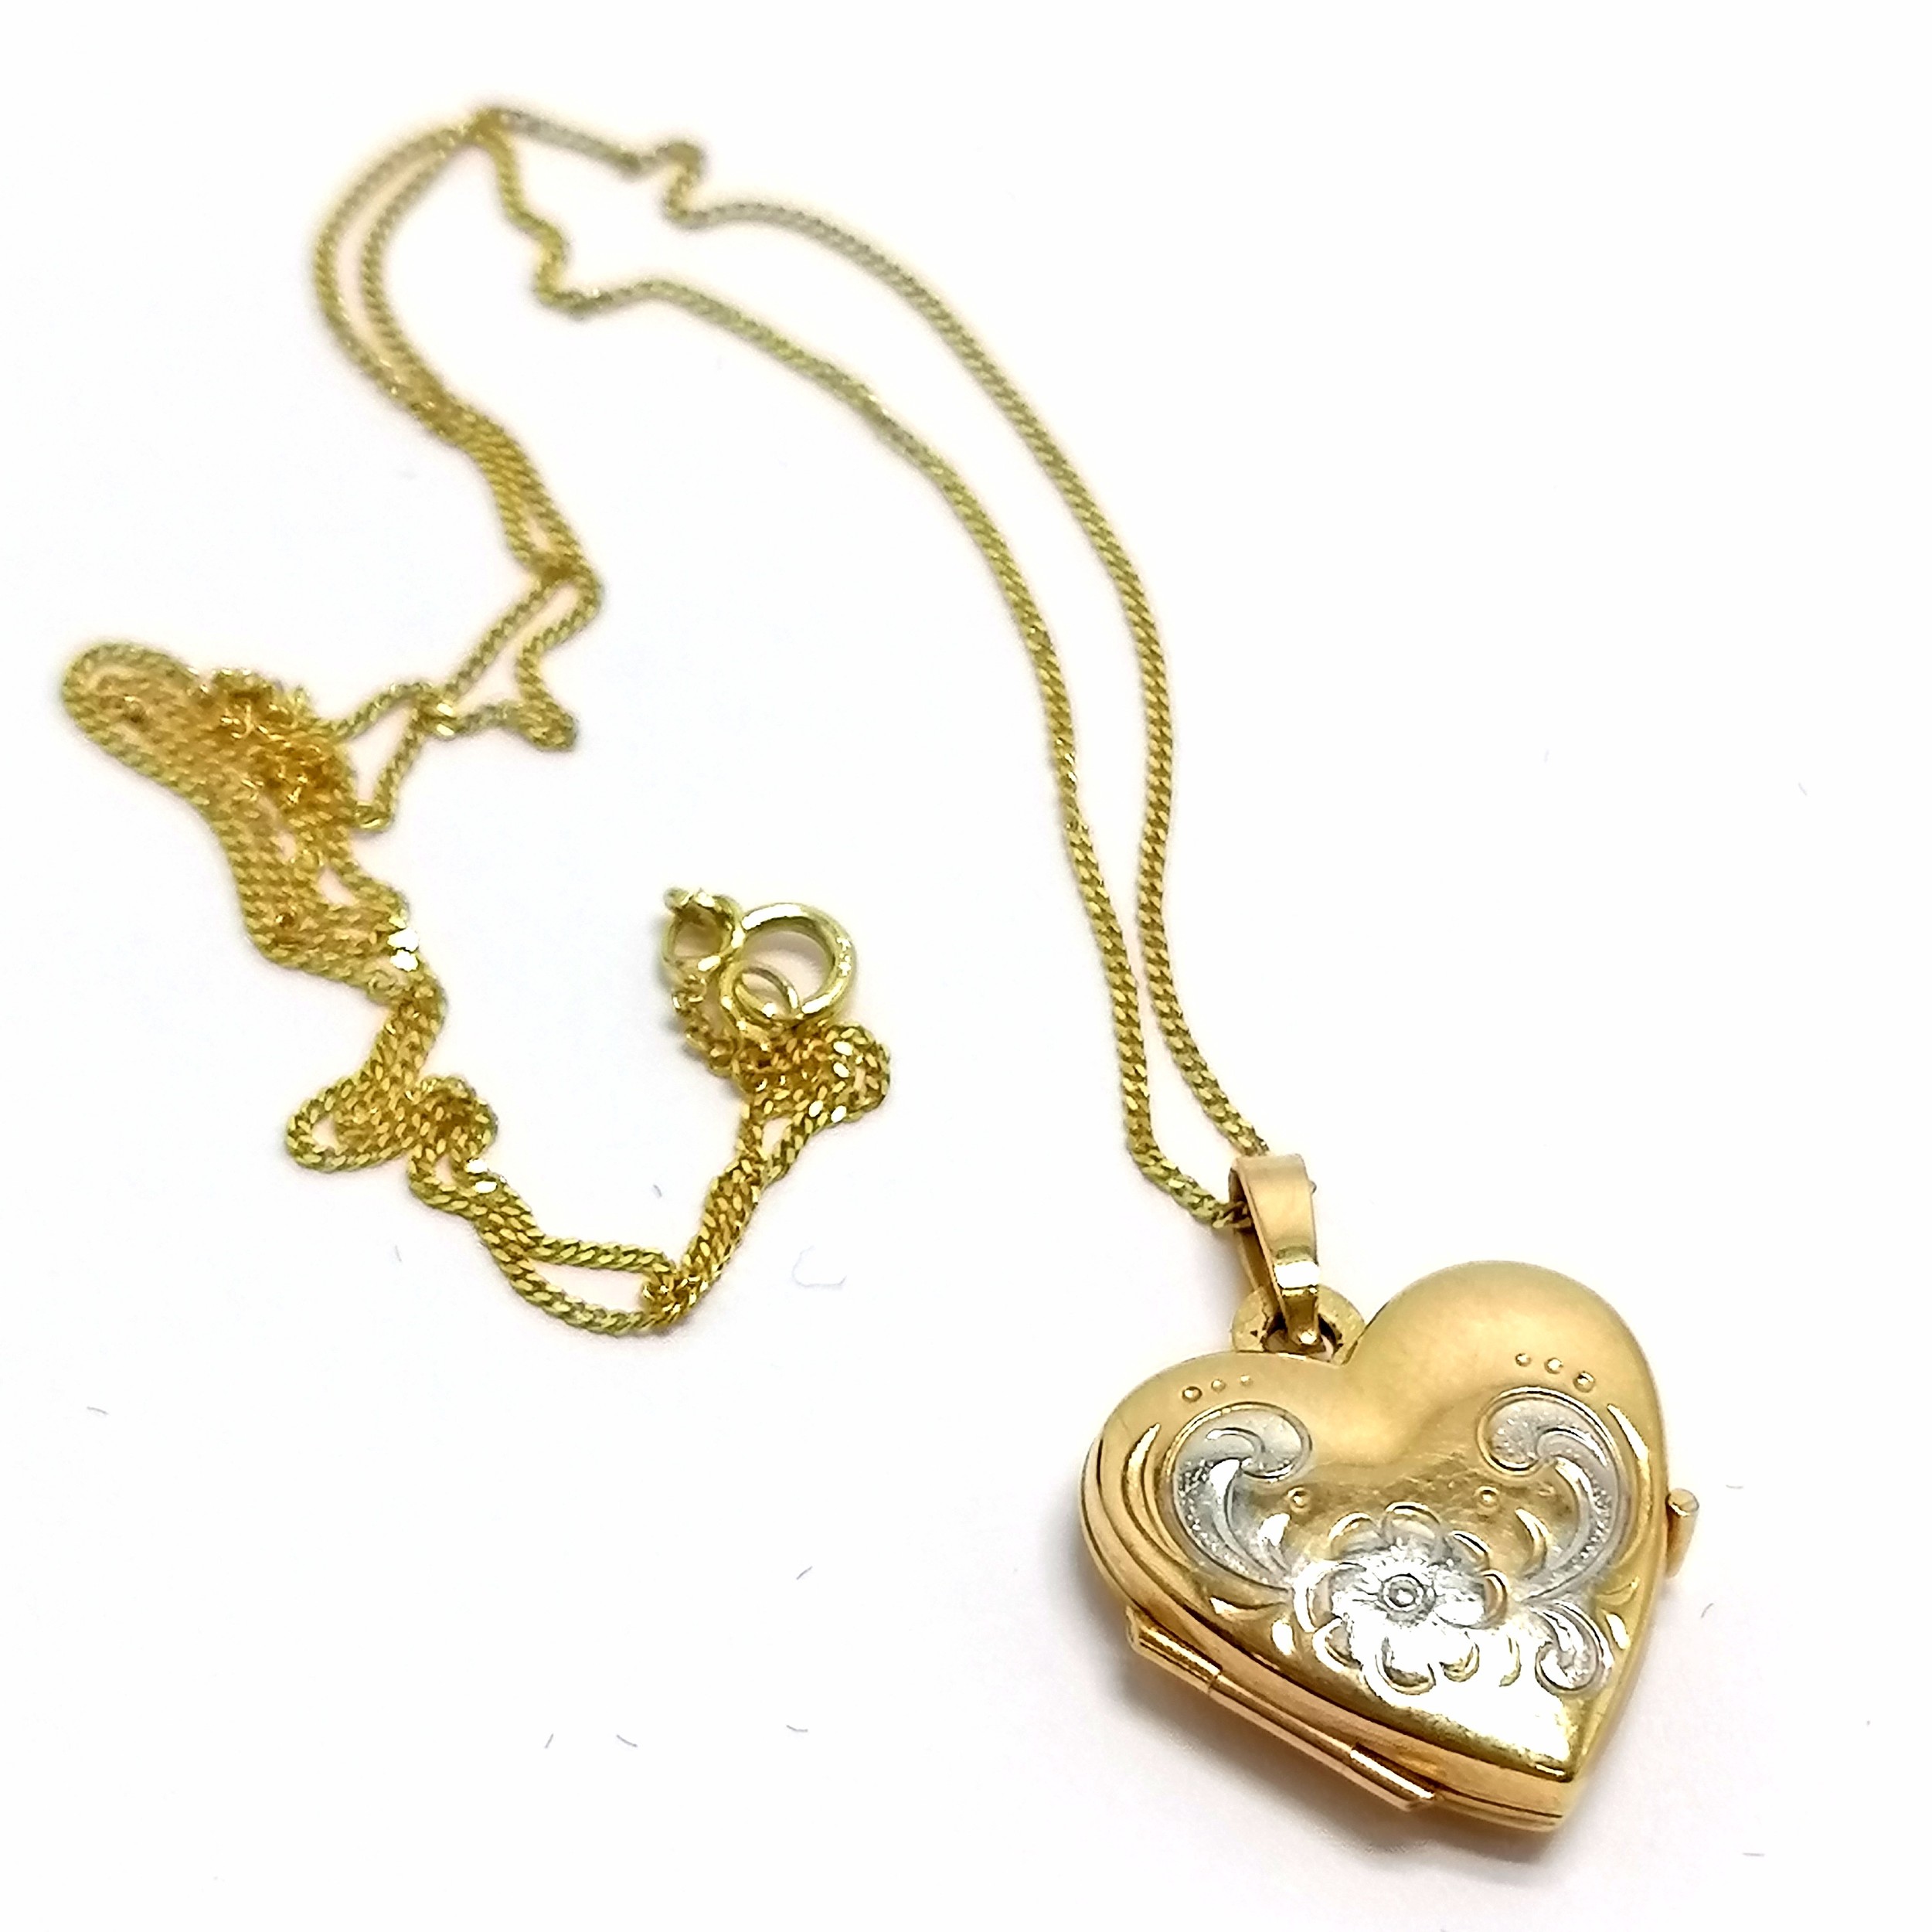 9ct hallmarked 2-tone gold heart shaped locket on 9ct marked gold 40cm neckchain - total weight 2.2g